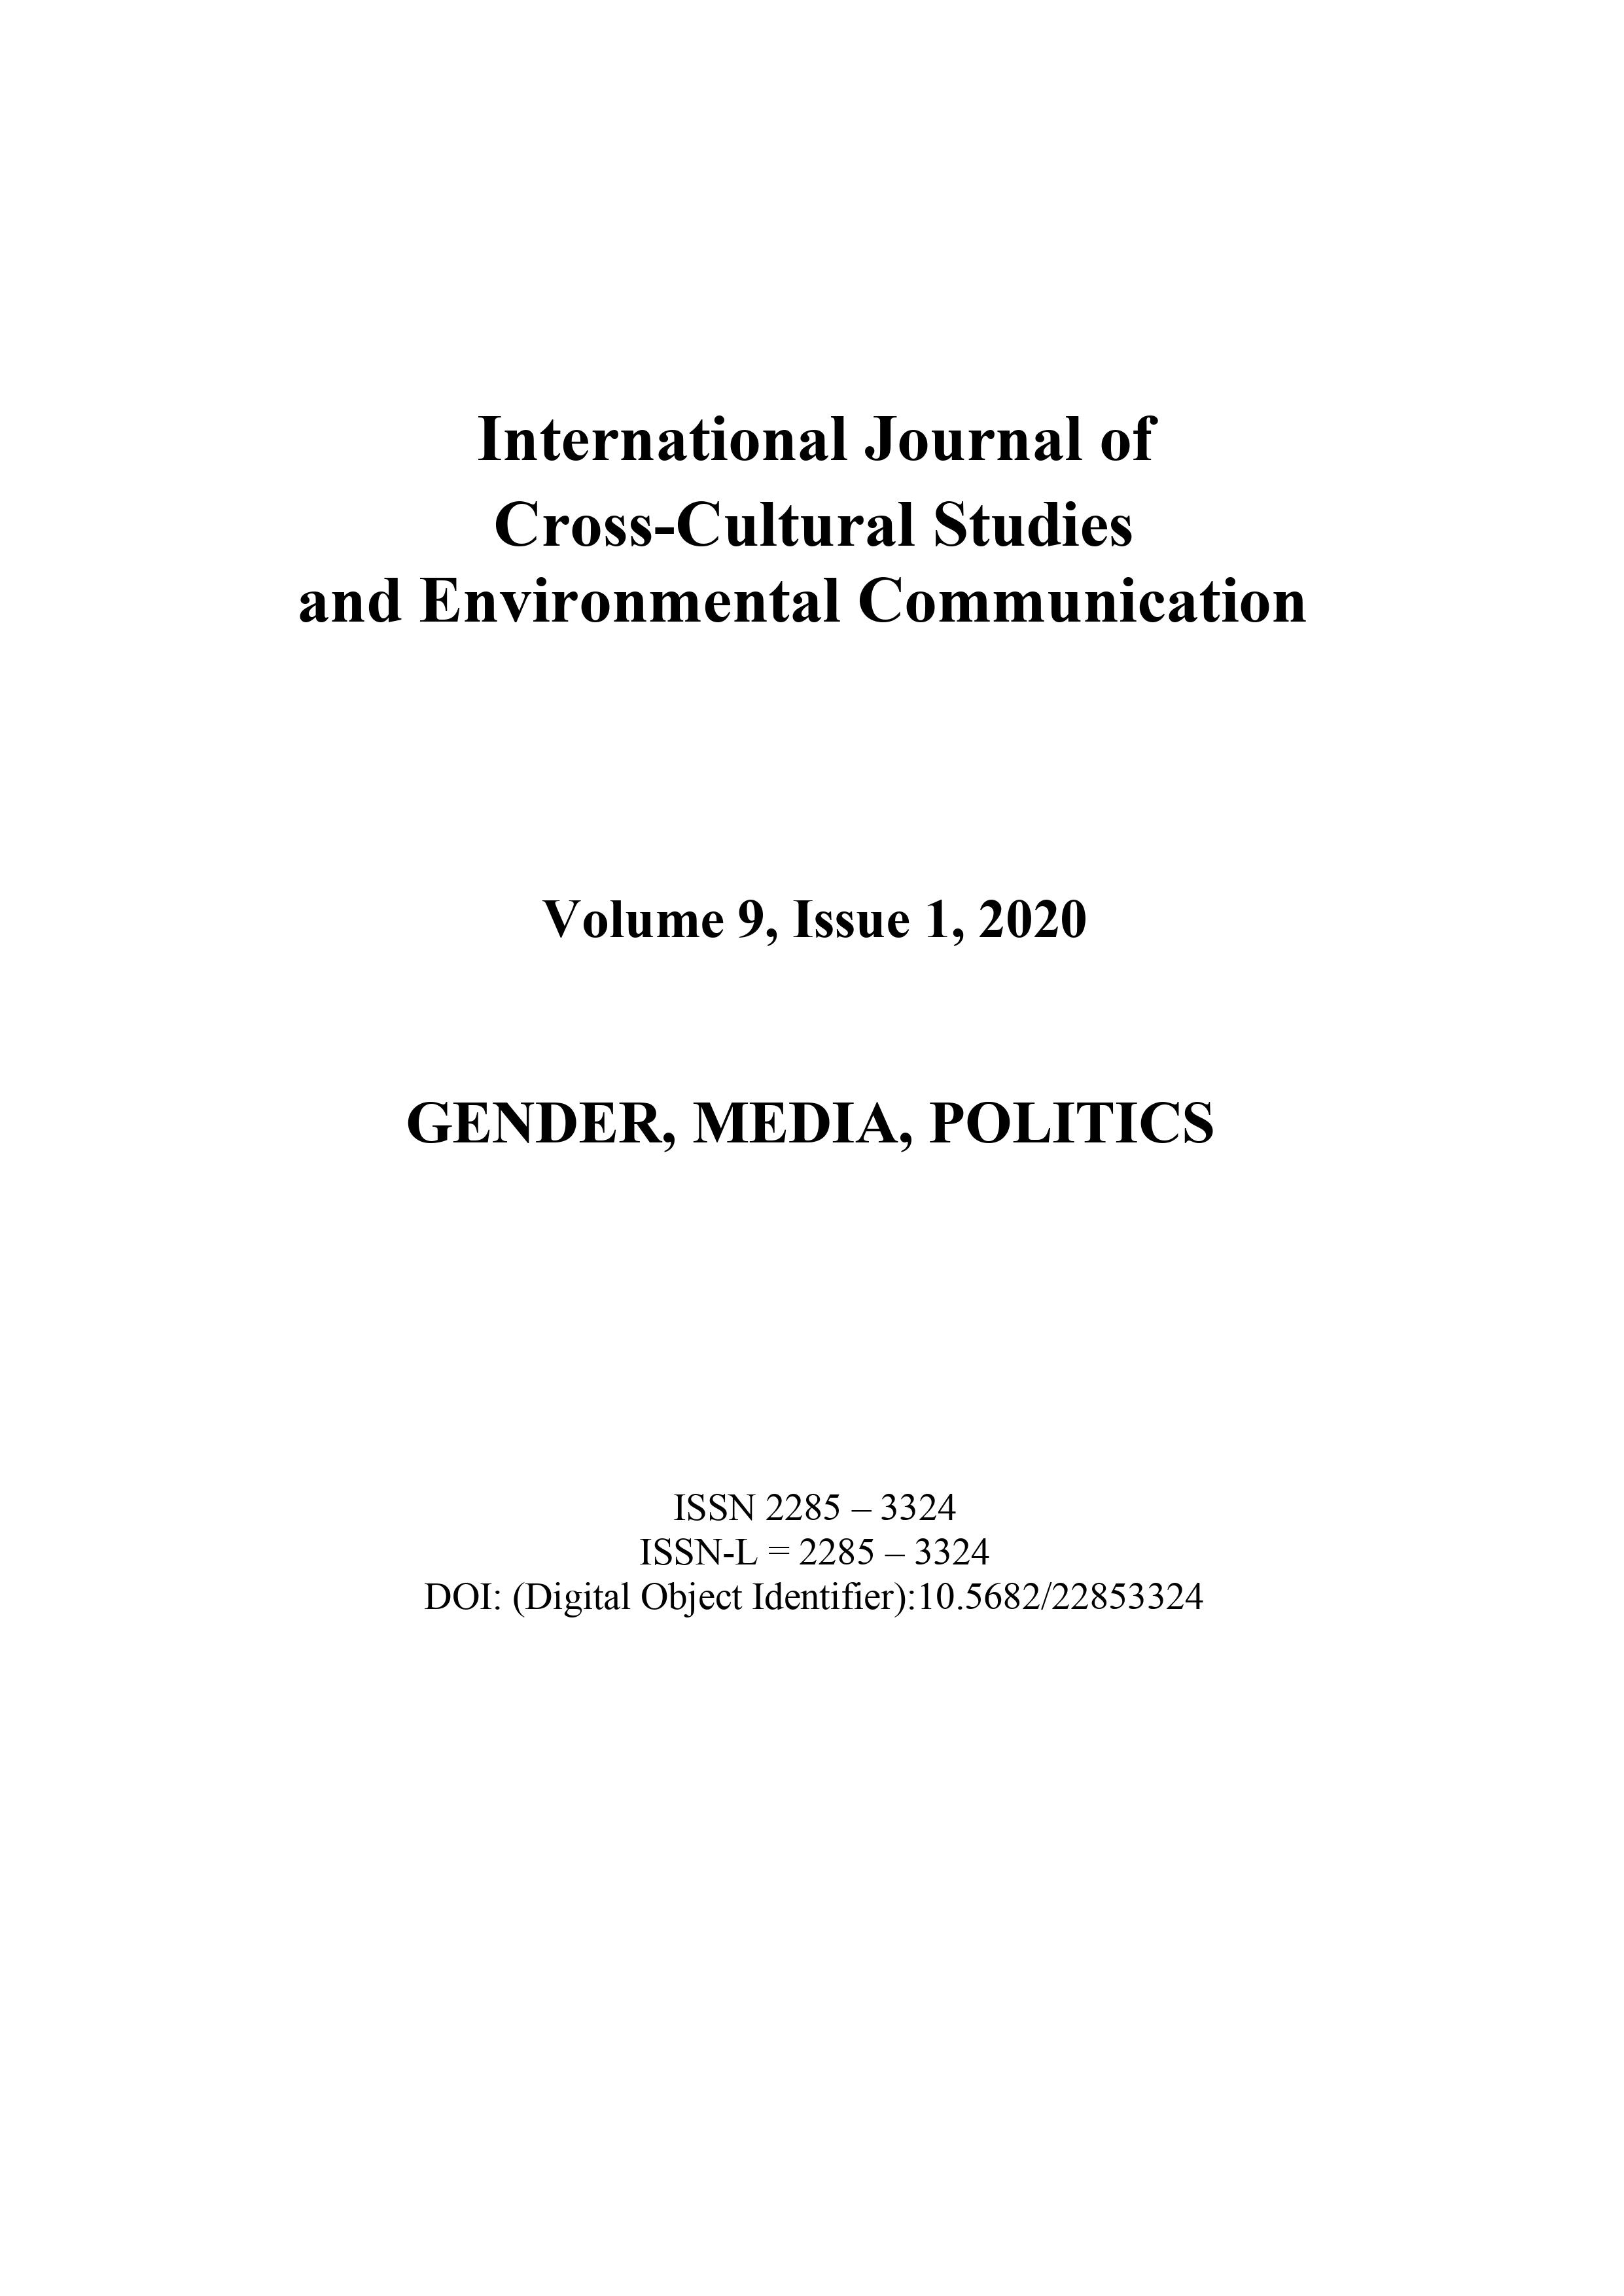 Introduction. Gender, media, politics Cover Image